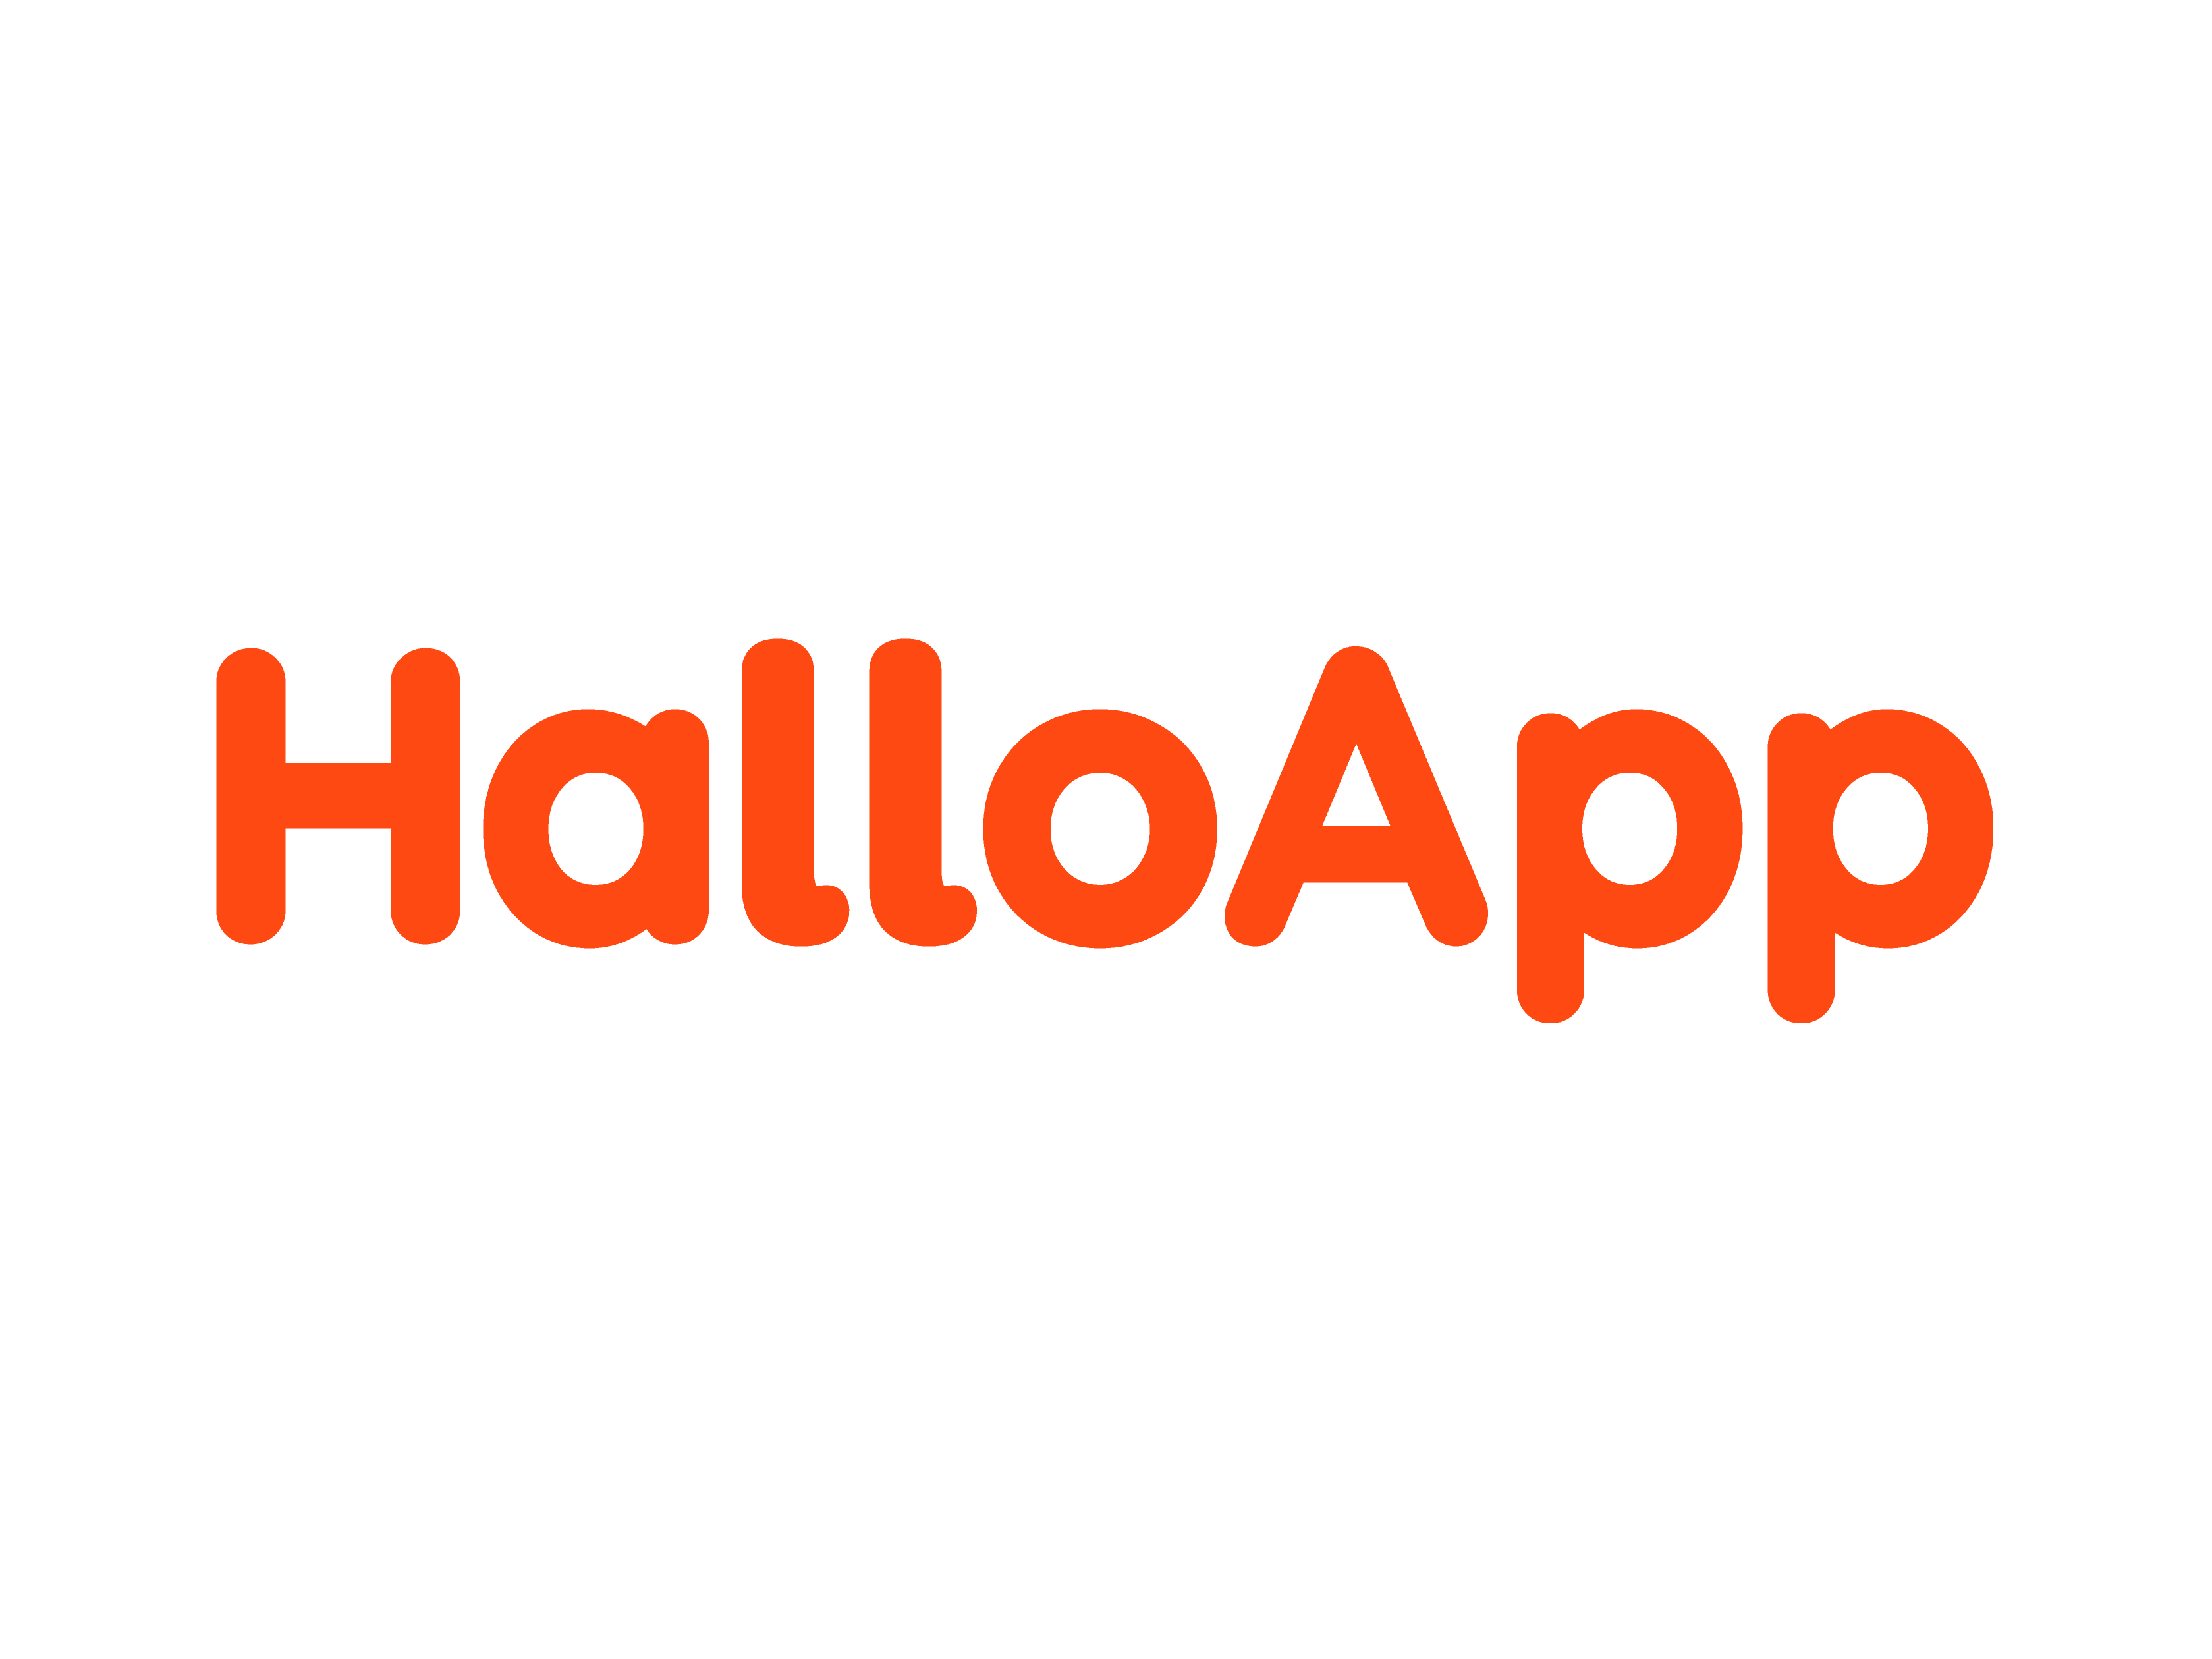 HalloApp Transparent Logo PNG